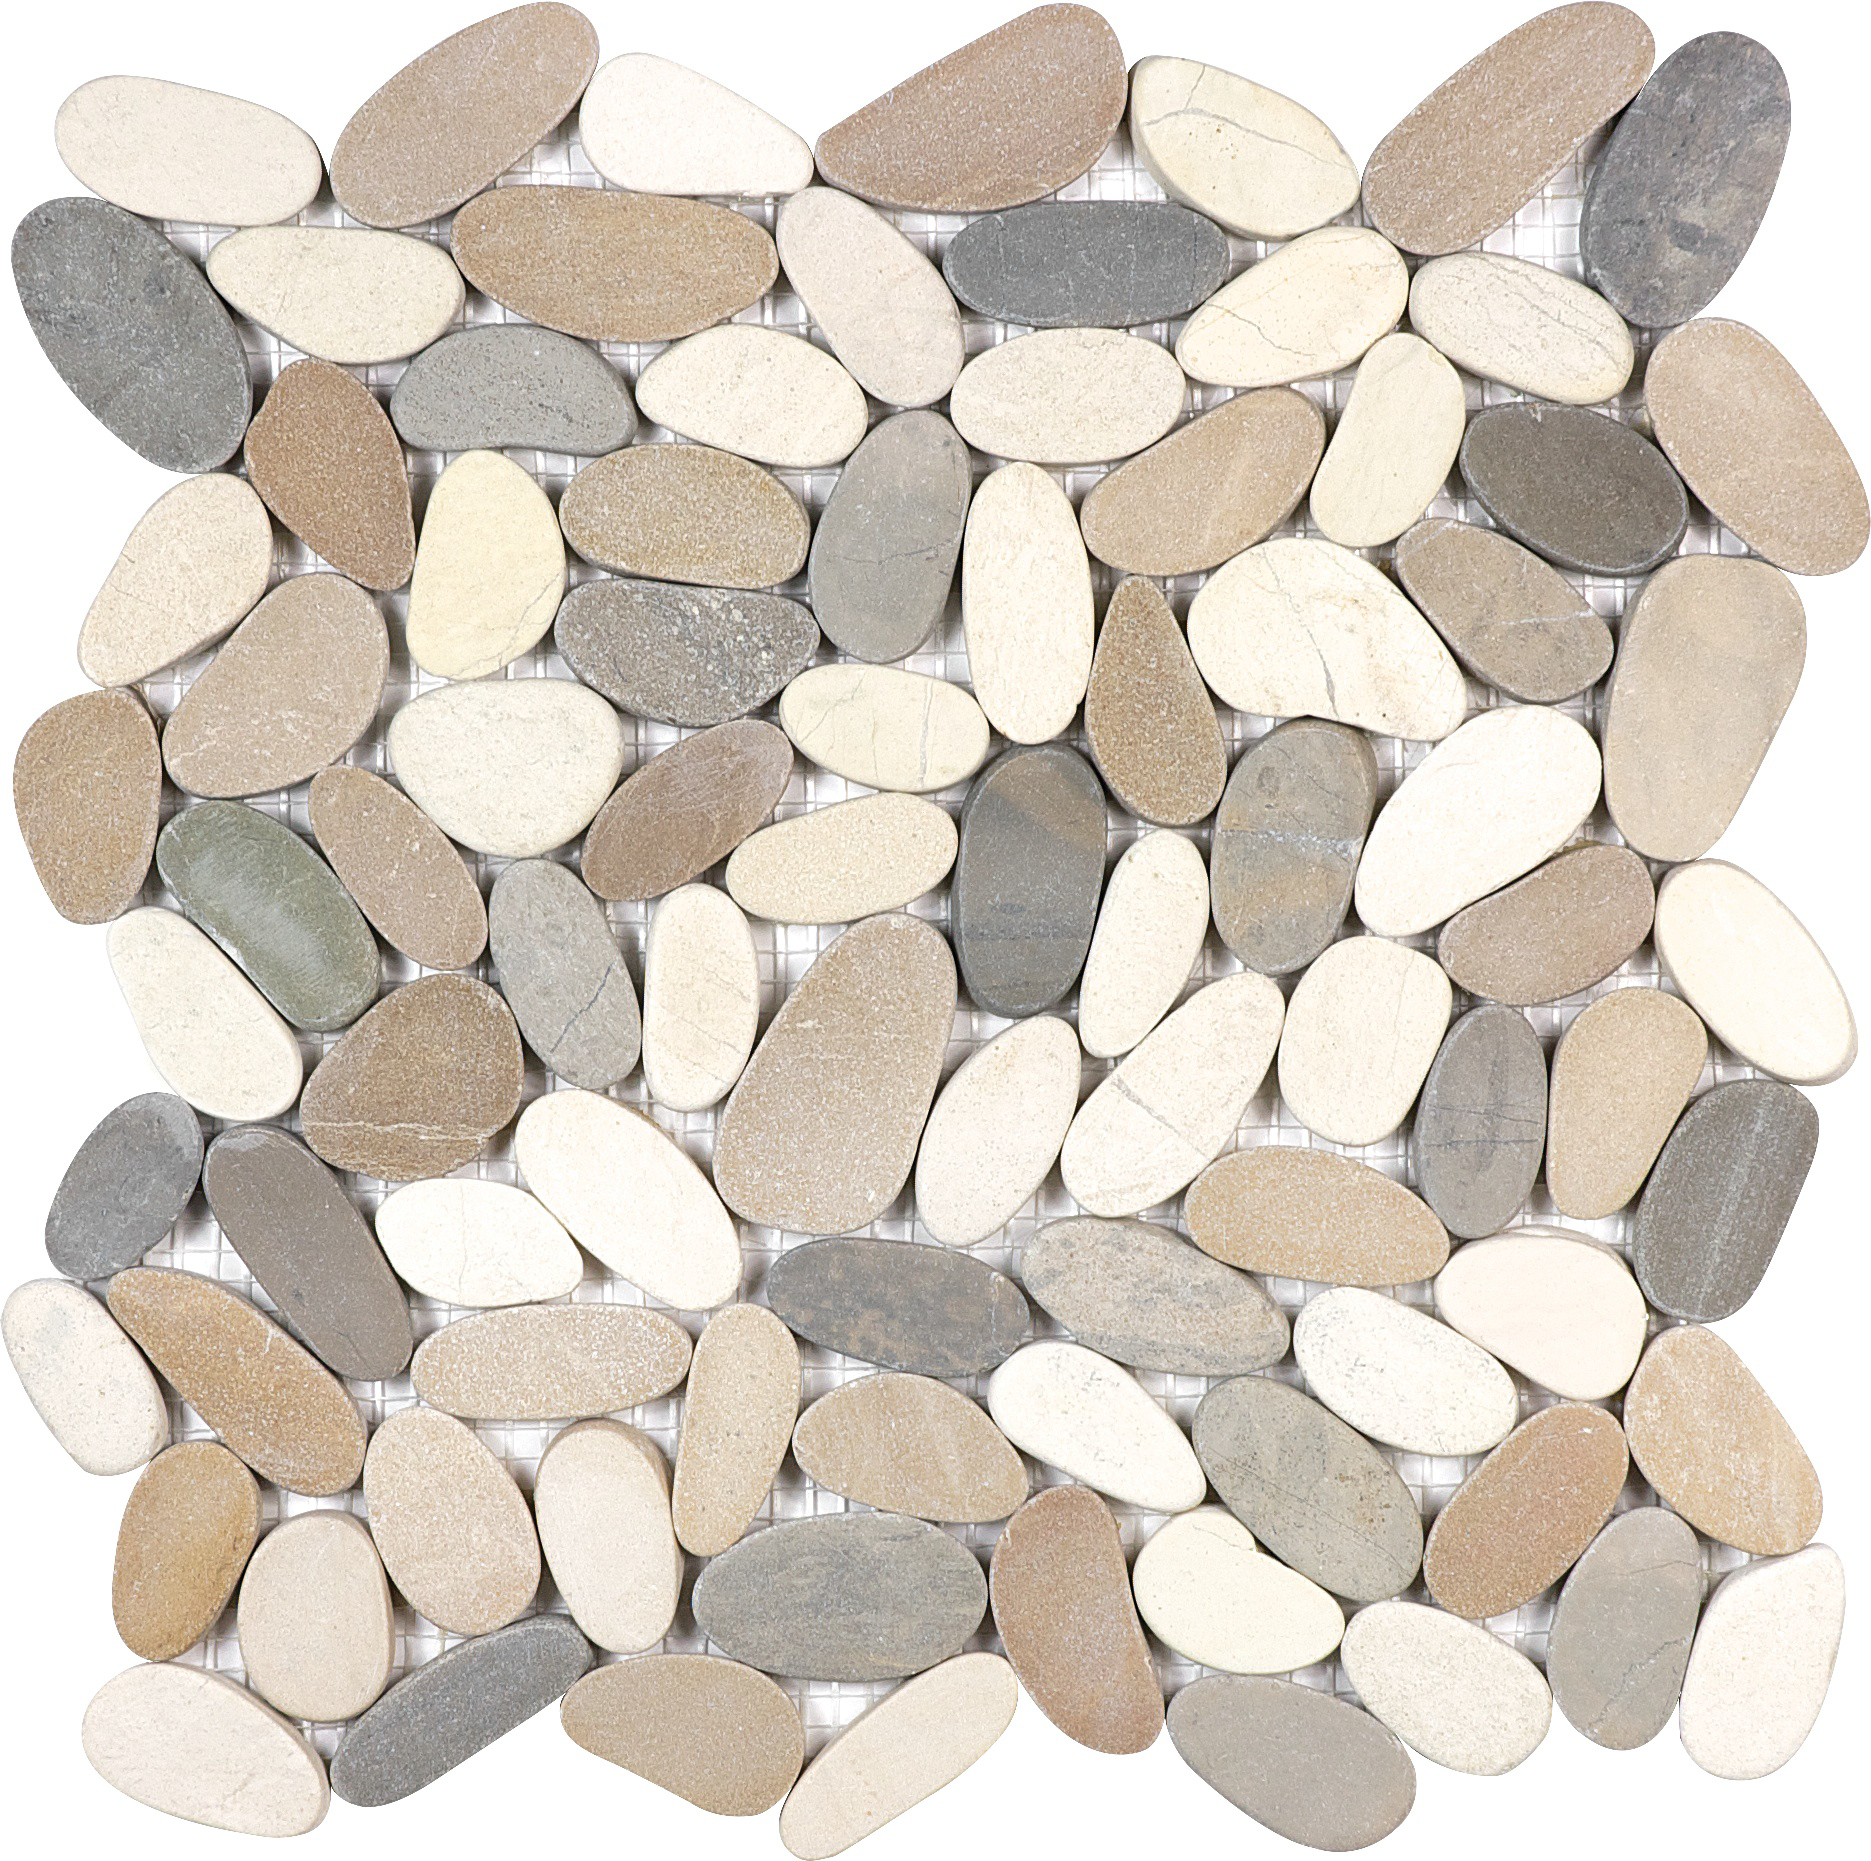 pebble harmony warm flat pebble pattern natural stone mosaic from zen anatolia collection distributed by surface group international matte finish straight edge edge mesh shape